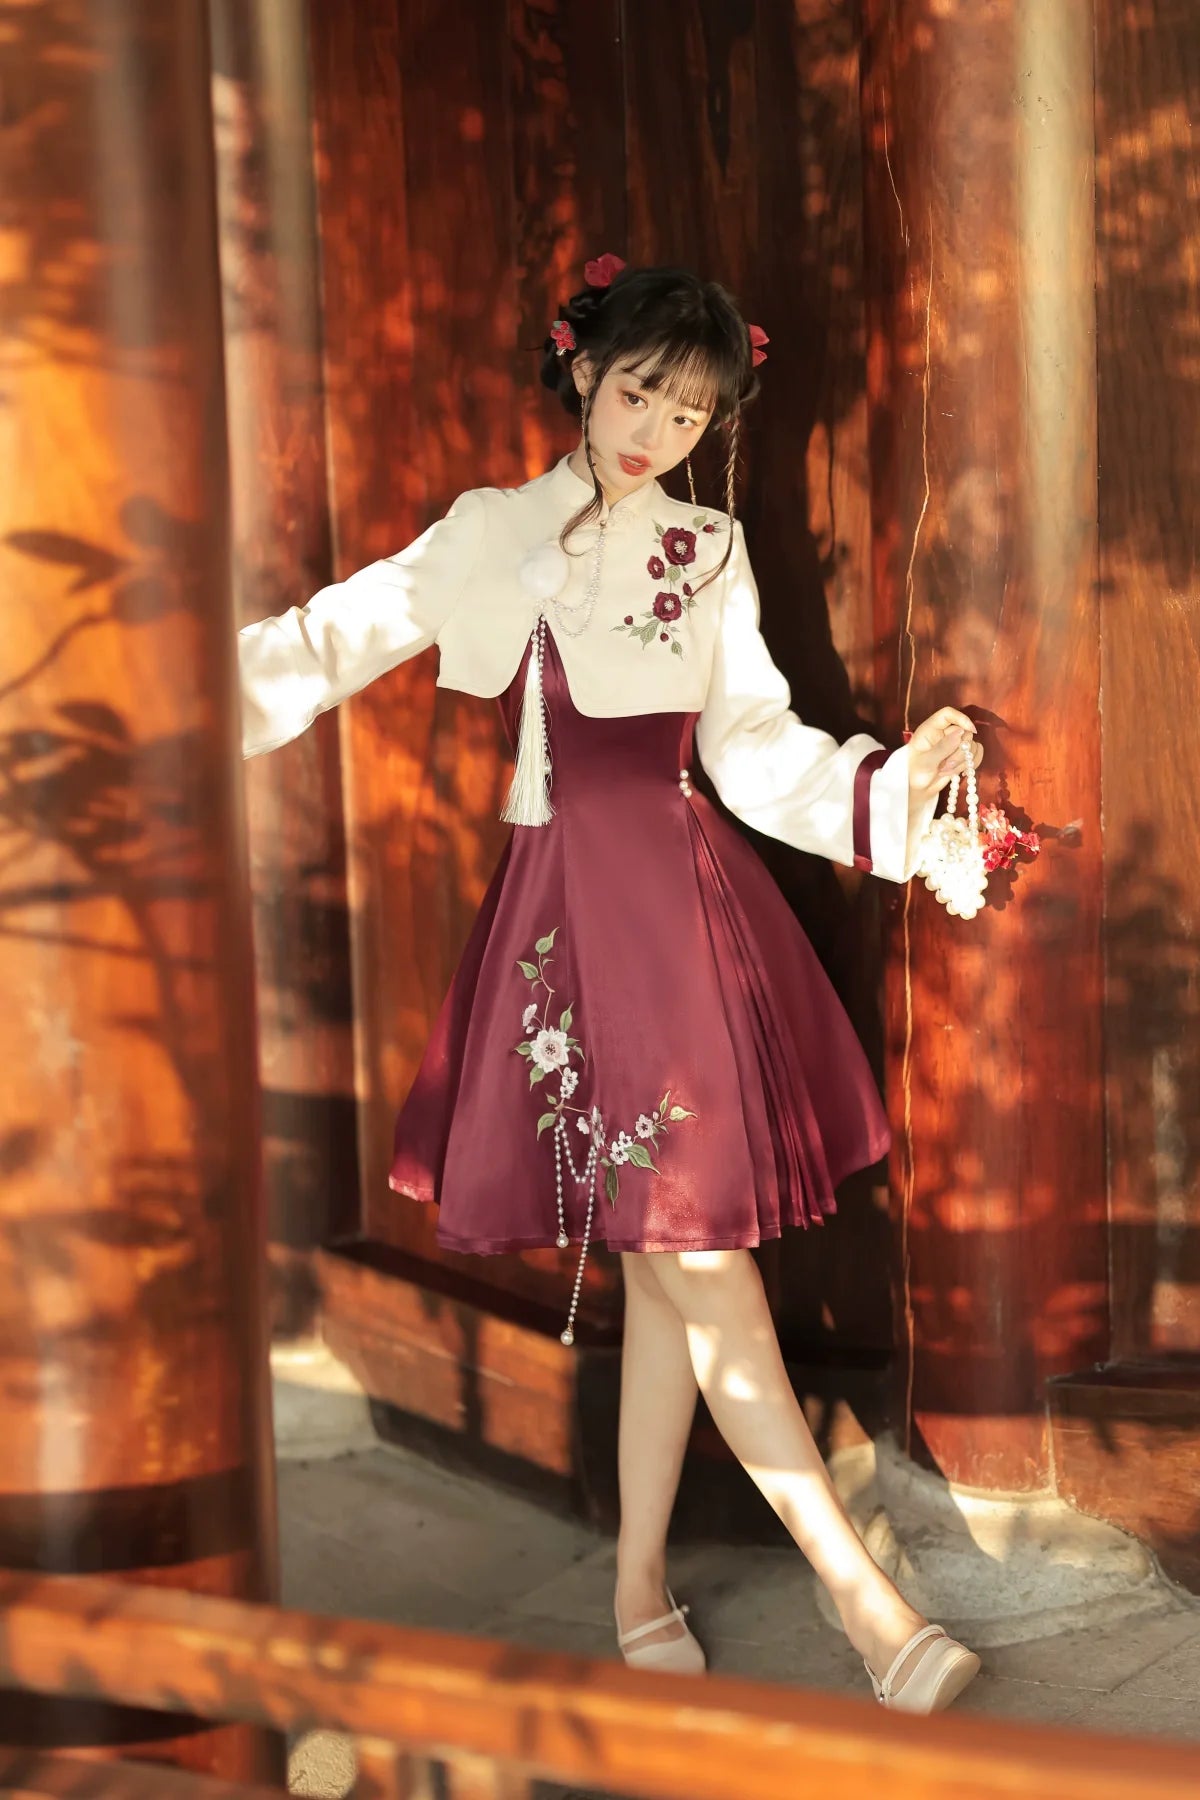 [Pre-order] Winter Tsubaki Pearl Chain Jumper Skirt and Tops